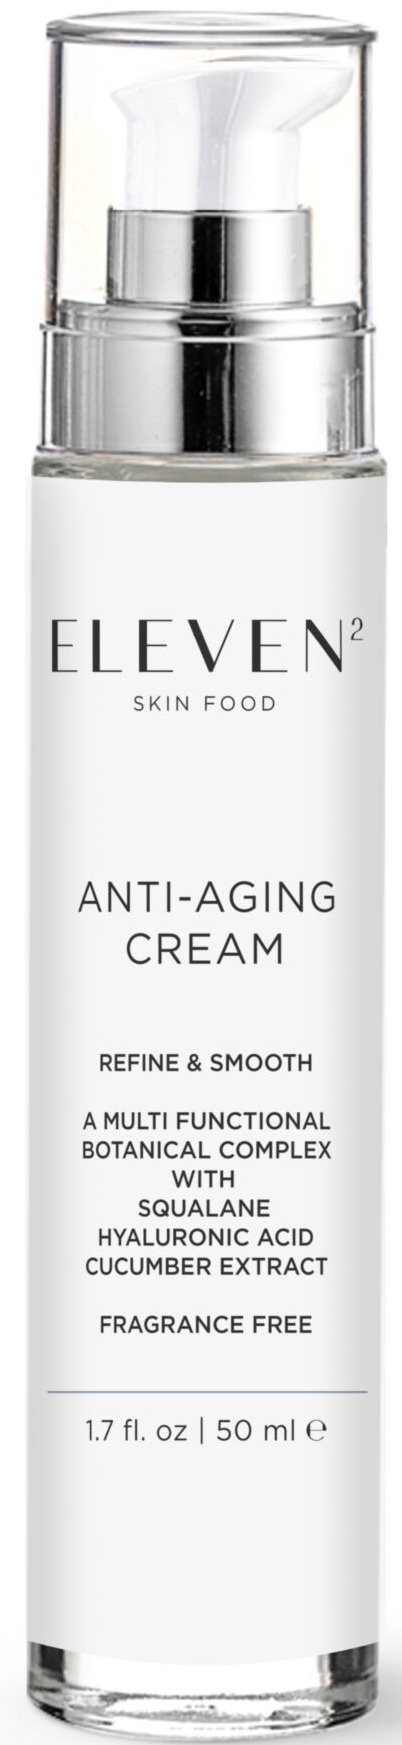 Eleven Skin Food Anti-aging Cream